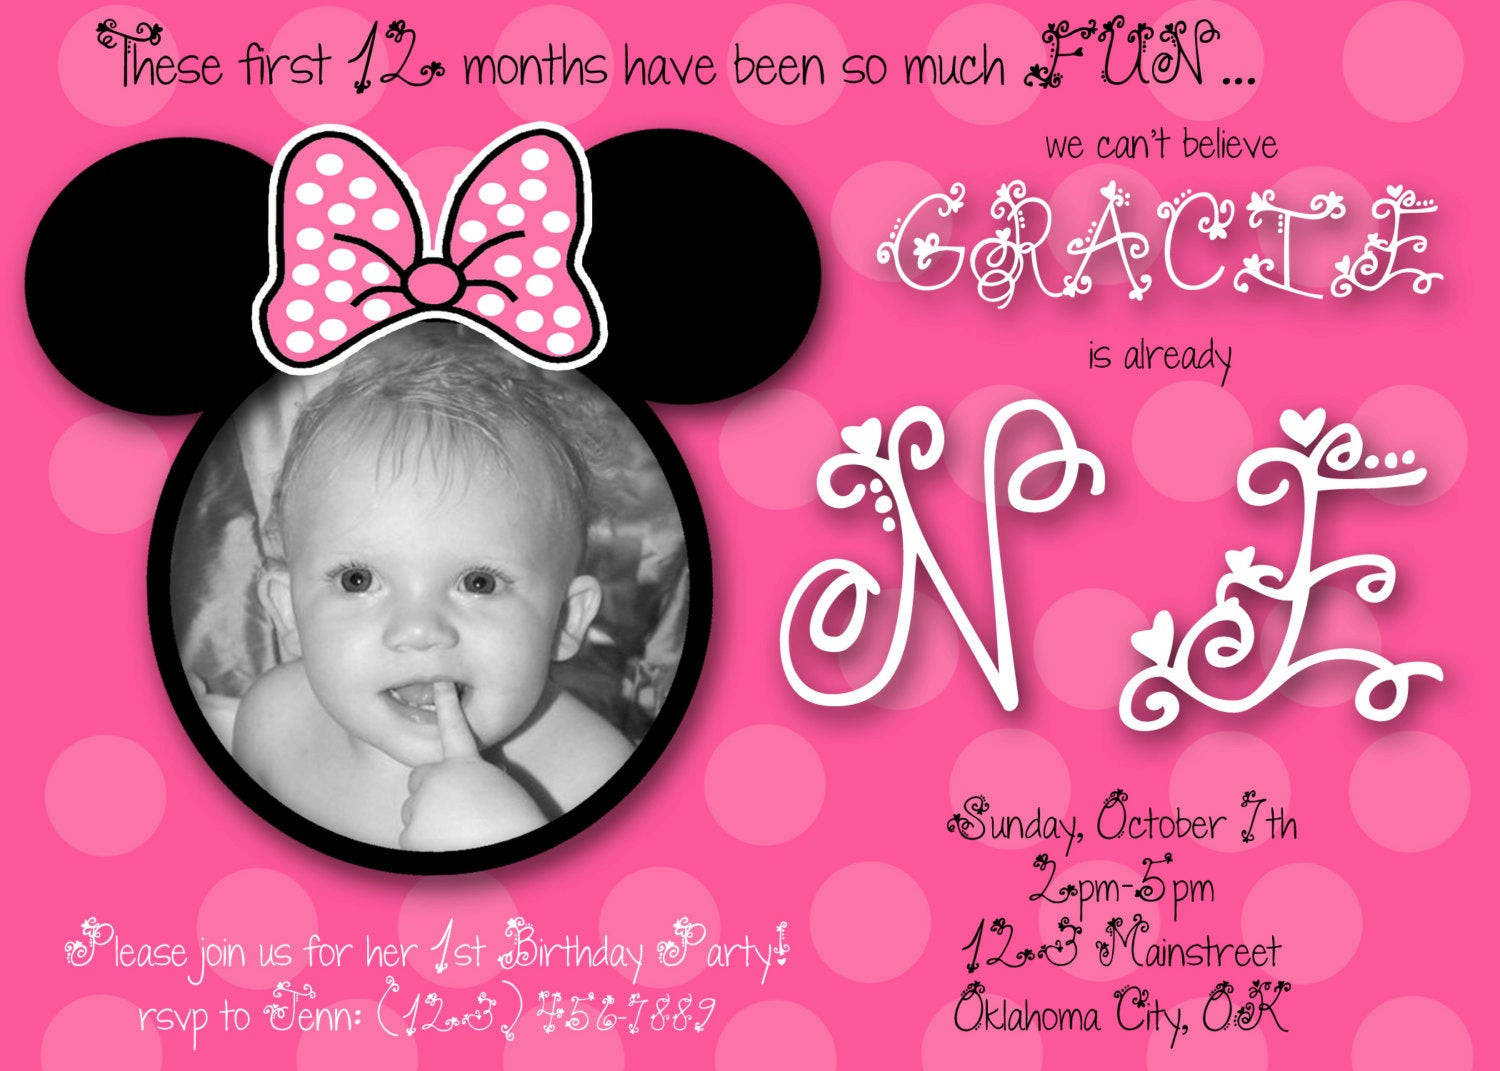 Minnie Mouse 1st Birthday Personalized Invitations
 Minnie Mouse First Birthday Custom Invitation by chloemazurek